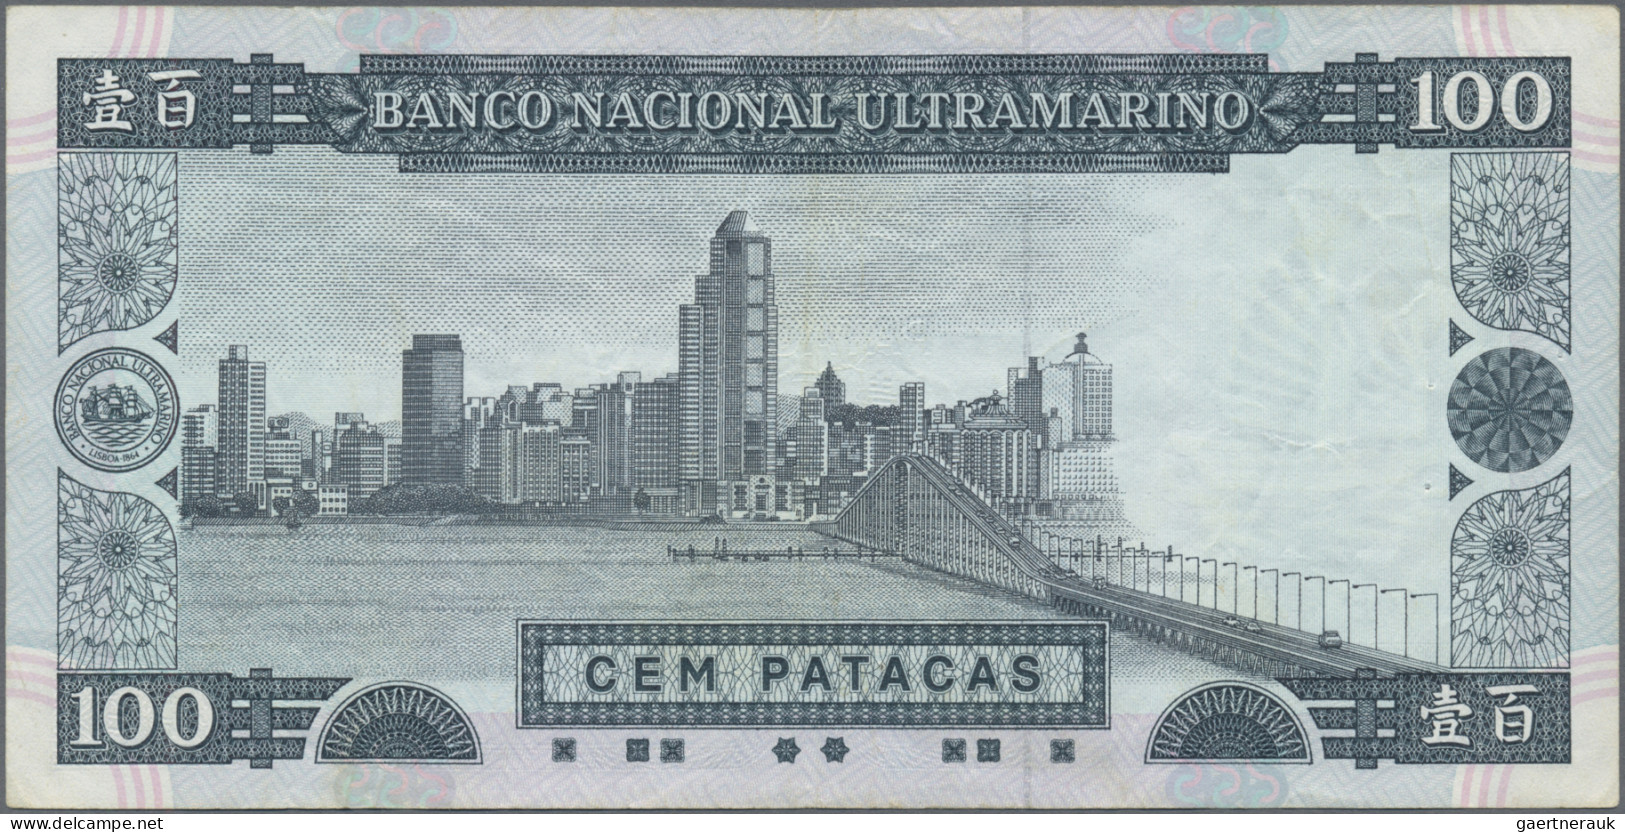 Macao: Banco Nacional Ultramarino, lot with 50, 100 and 500 Patacas 1990-1992, P